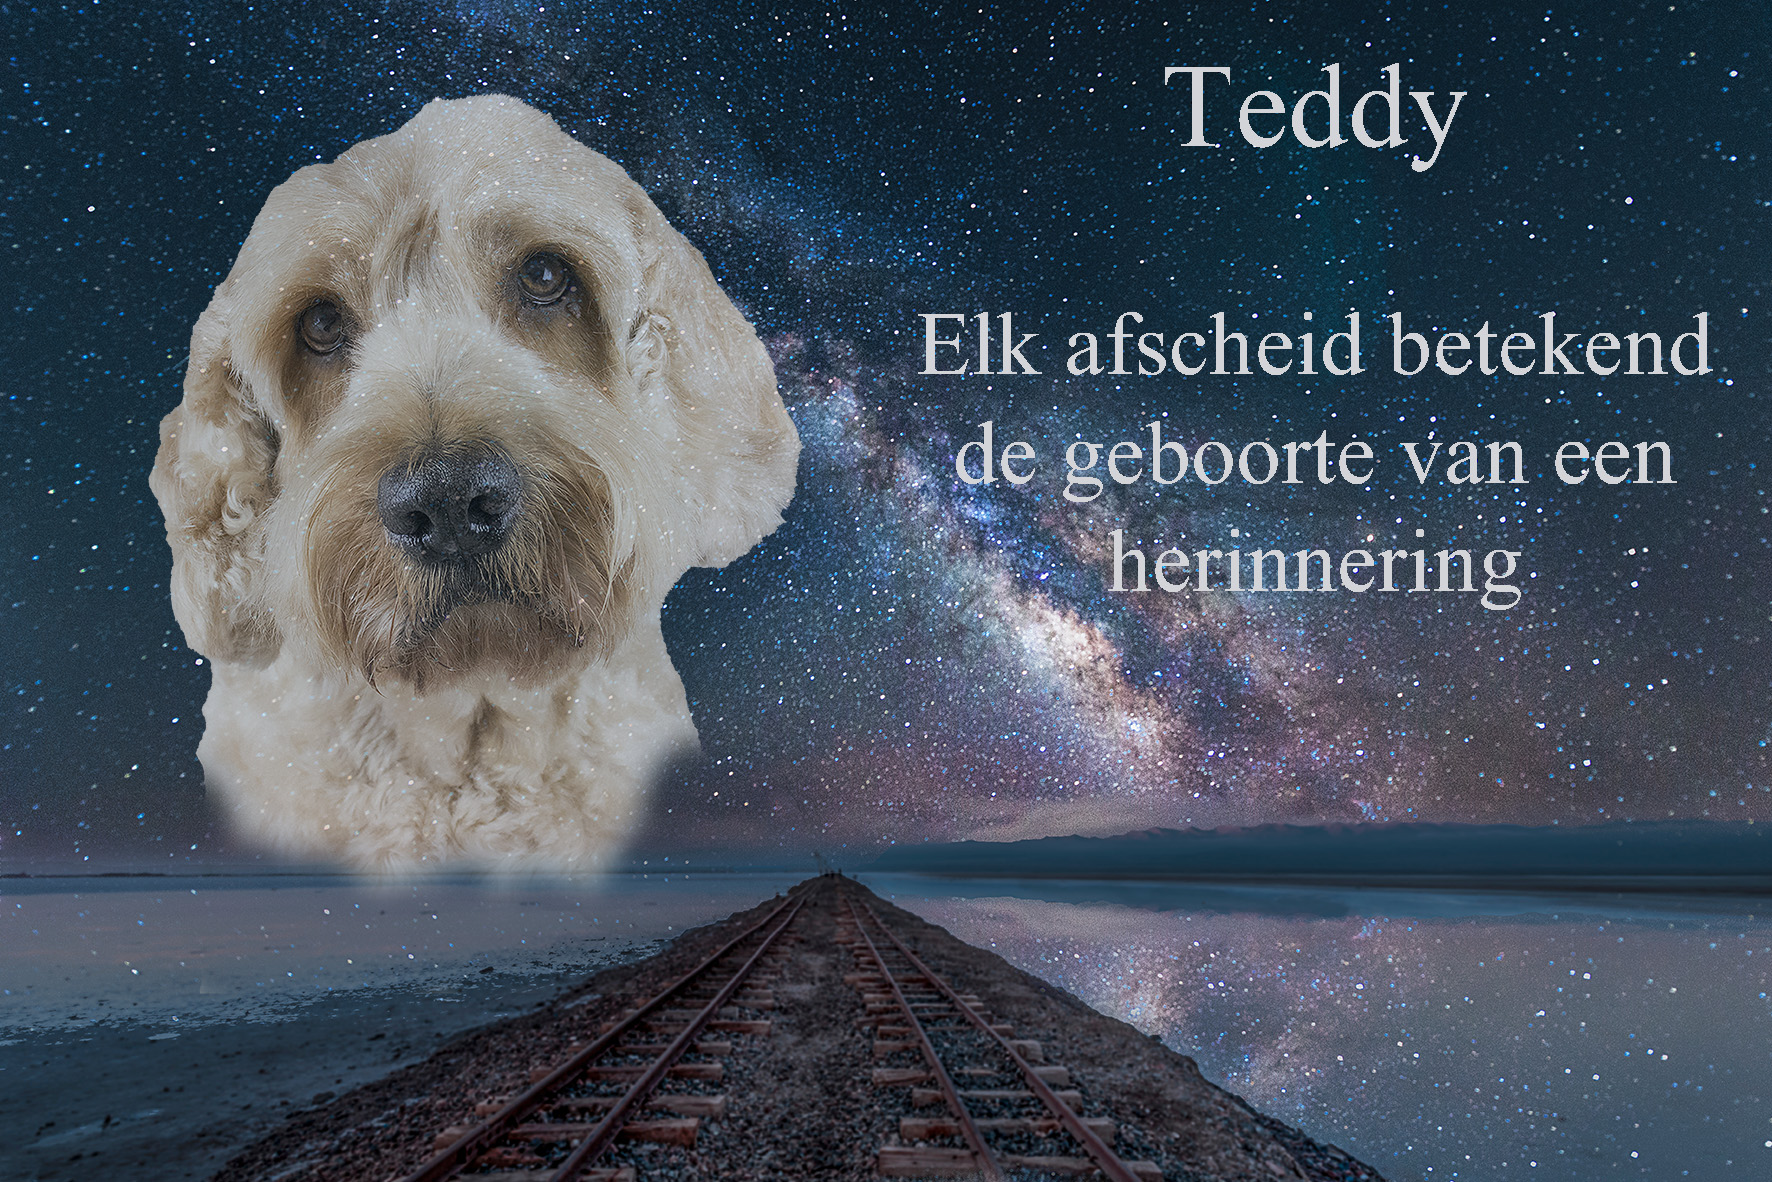 afscheid teddy